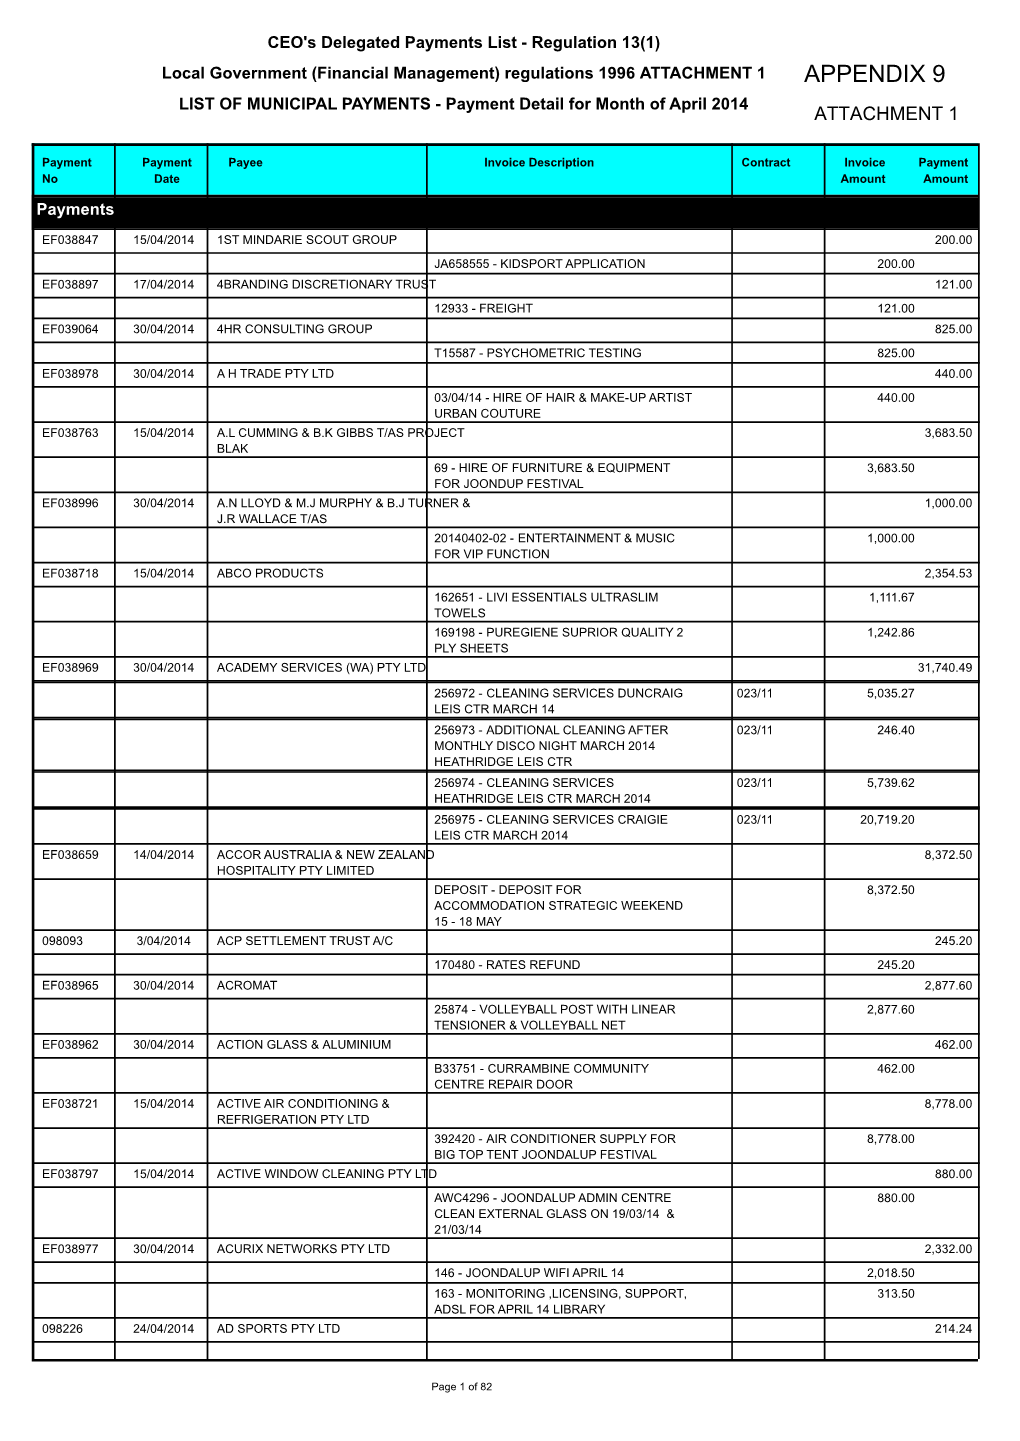 APPENDIX 9 LIST of MUNICIPAL PAYMENTS - Payment Detail for Month of April 2014 ATTACHMENT 1